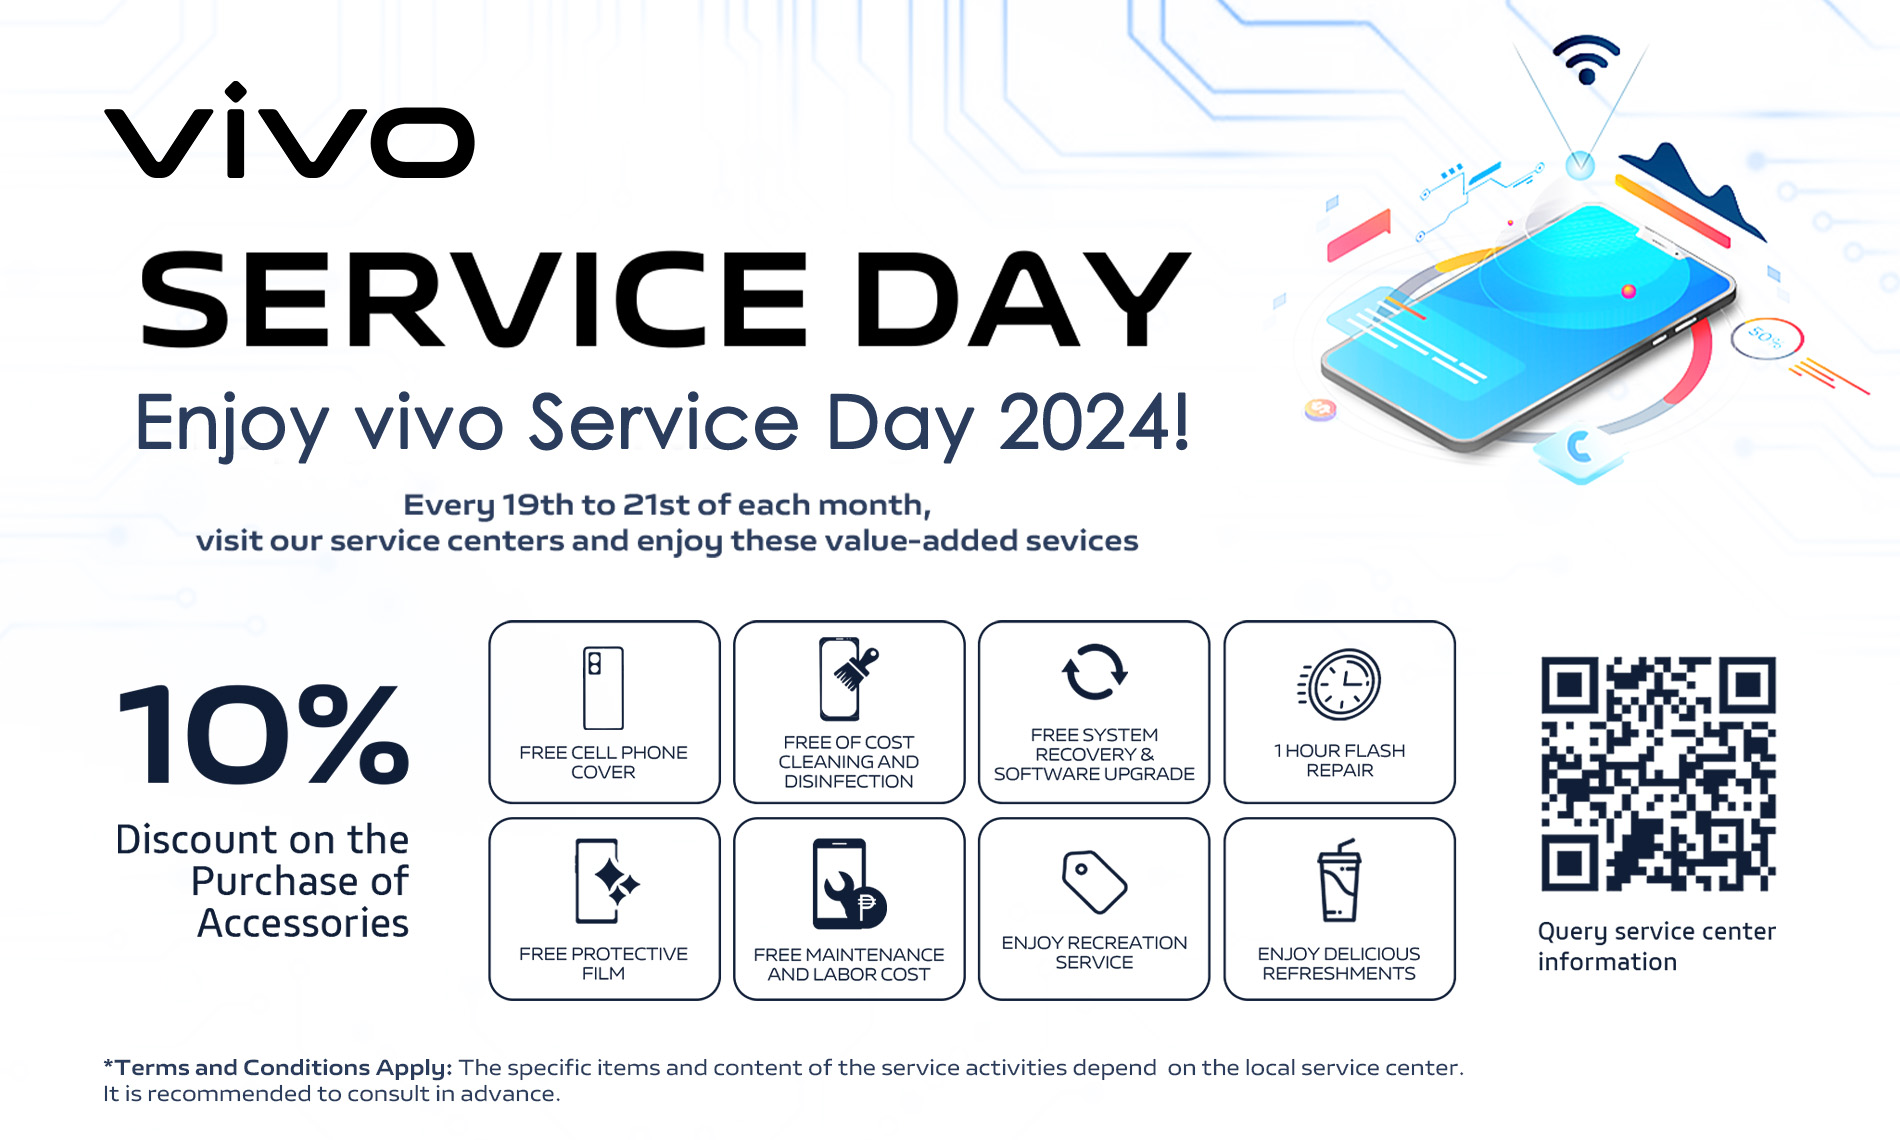 Enjoy vivo Service Day